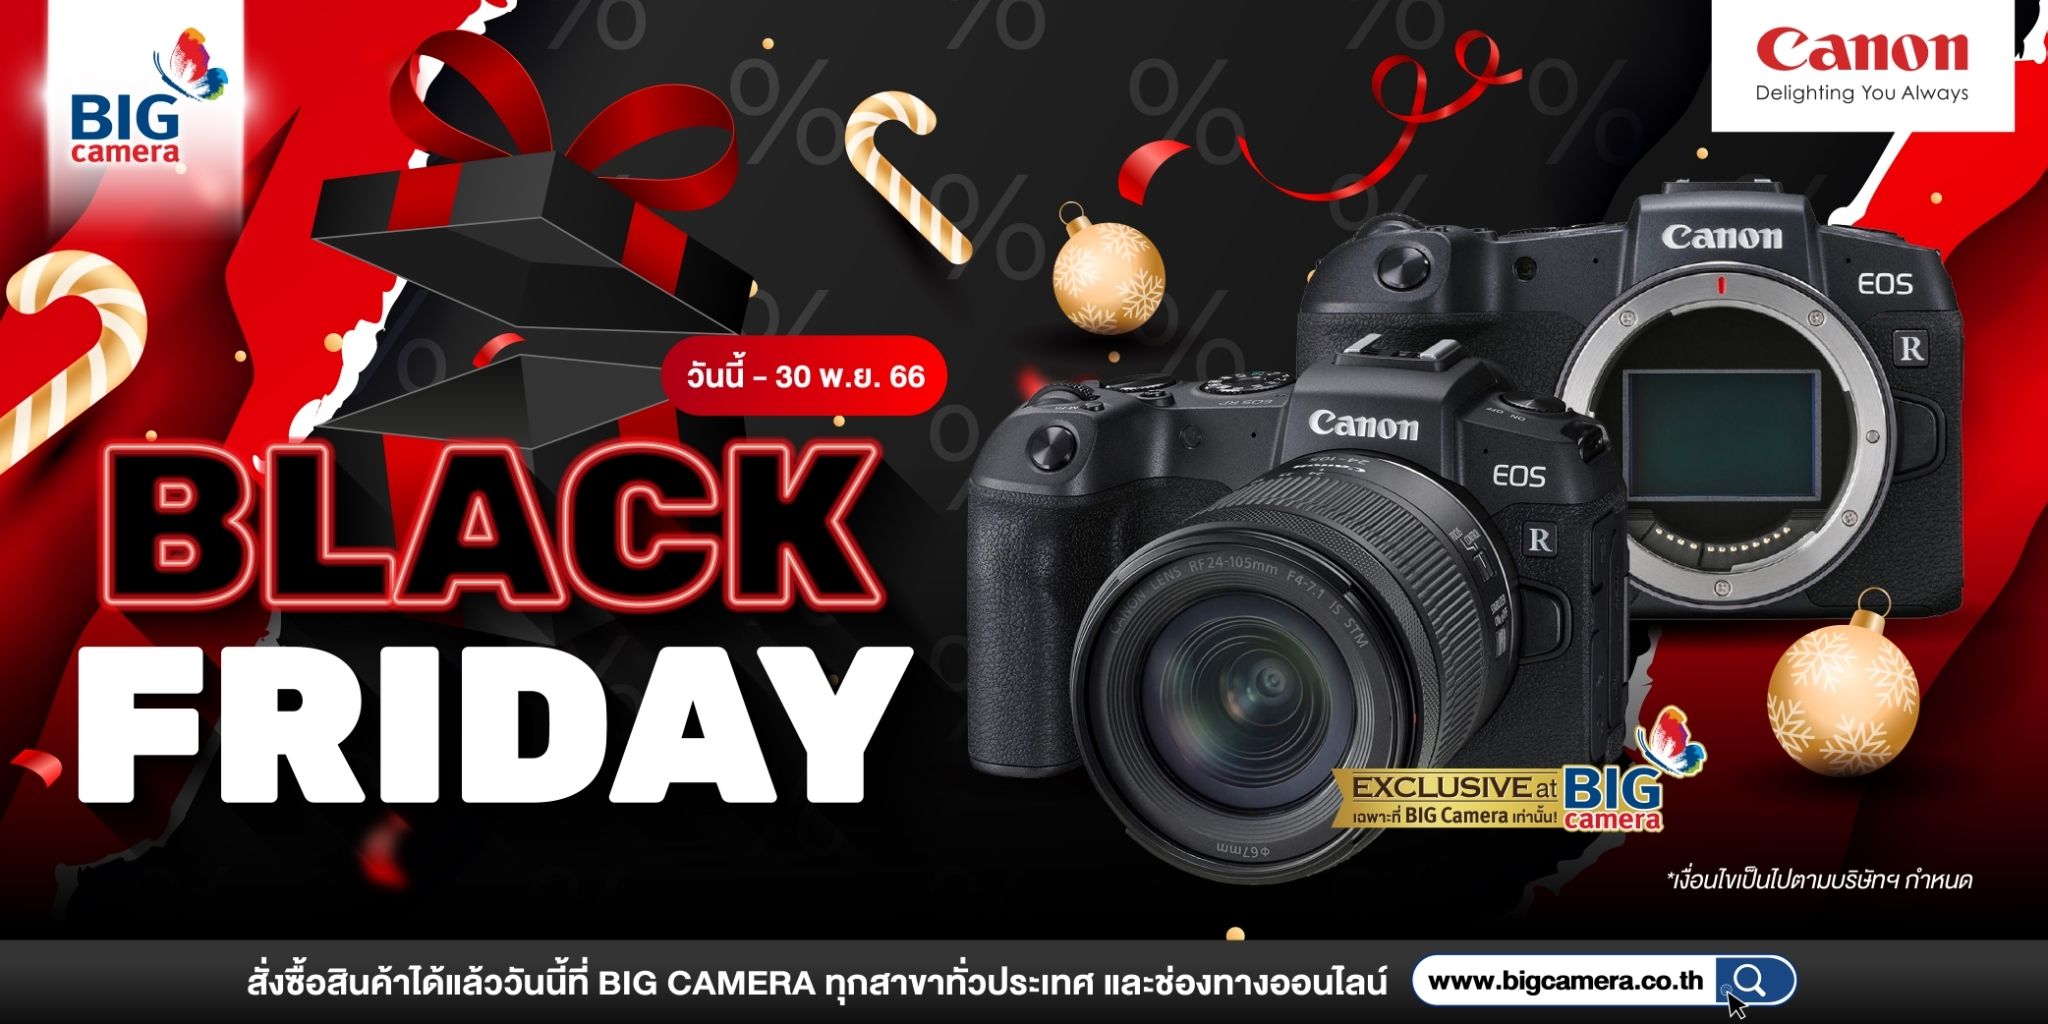 Canon Black Friday Canon EOS RP ลดทันที 6,000.-